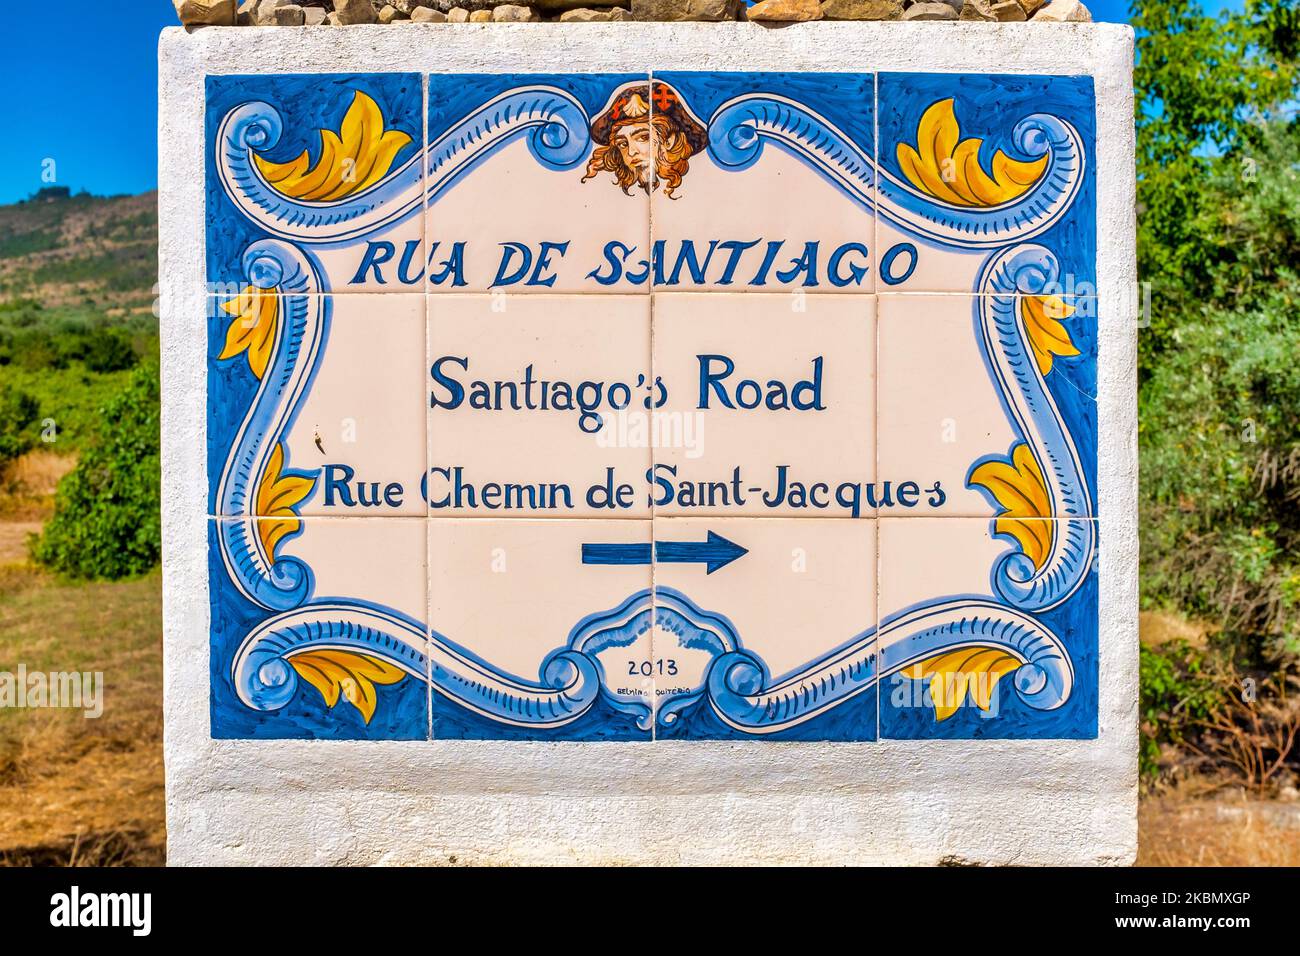 Indicazioni per Caminho de Santiago, Alvorge, Portogallo Foto Stock